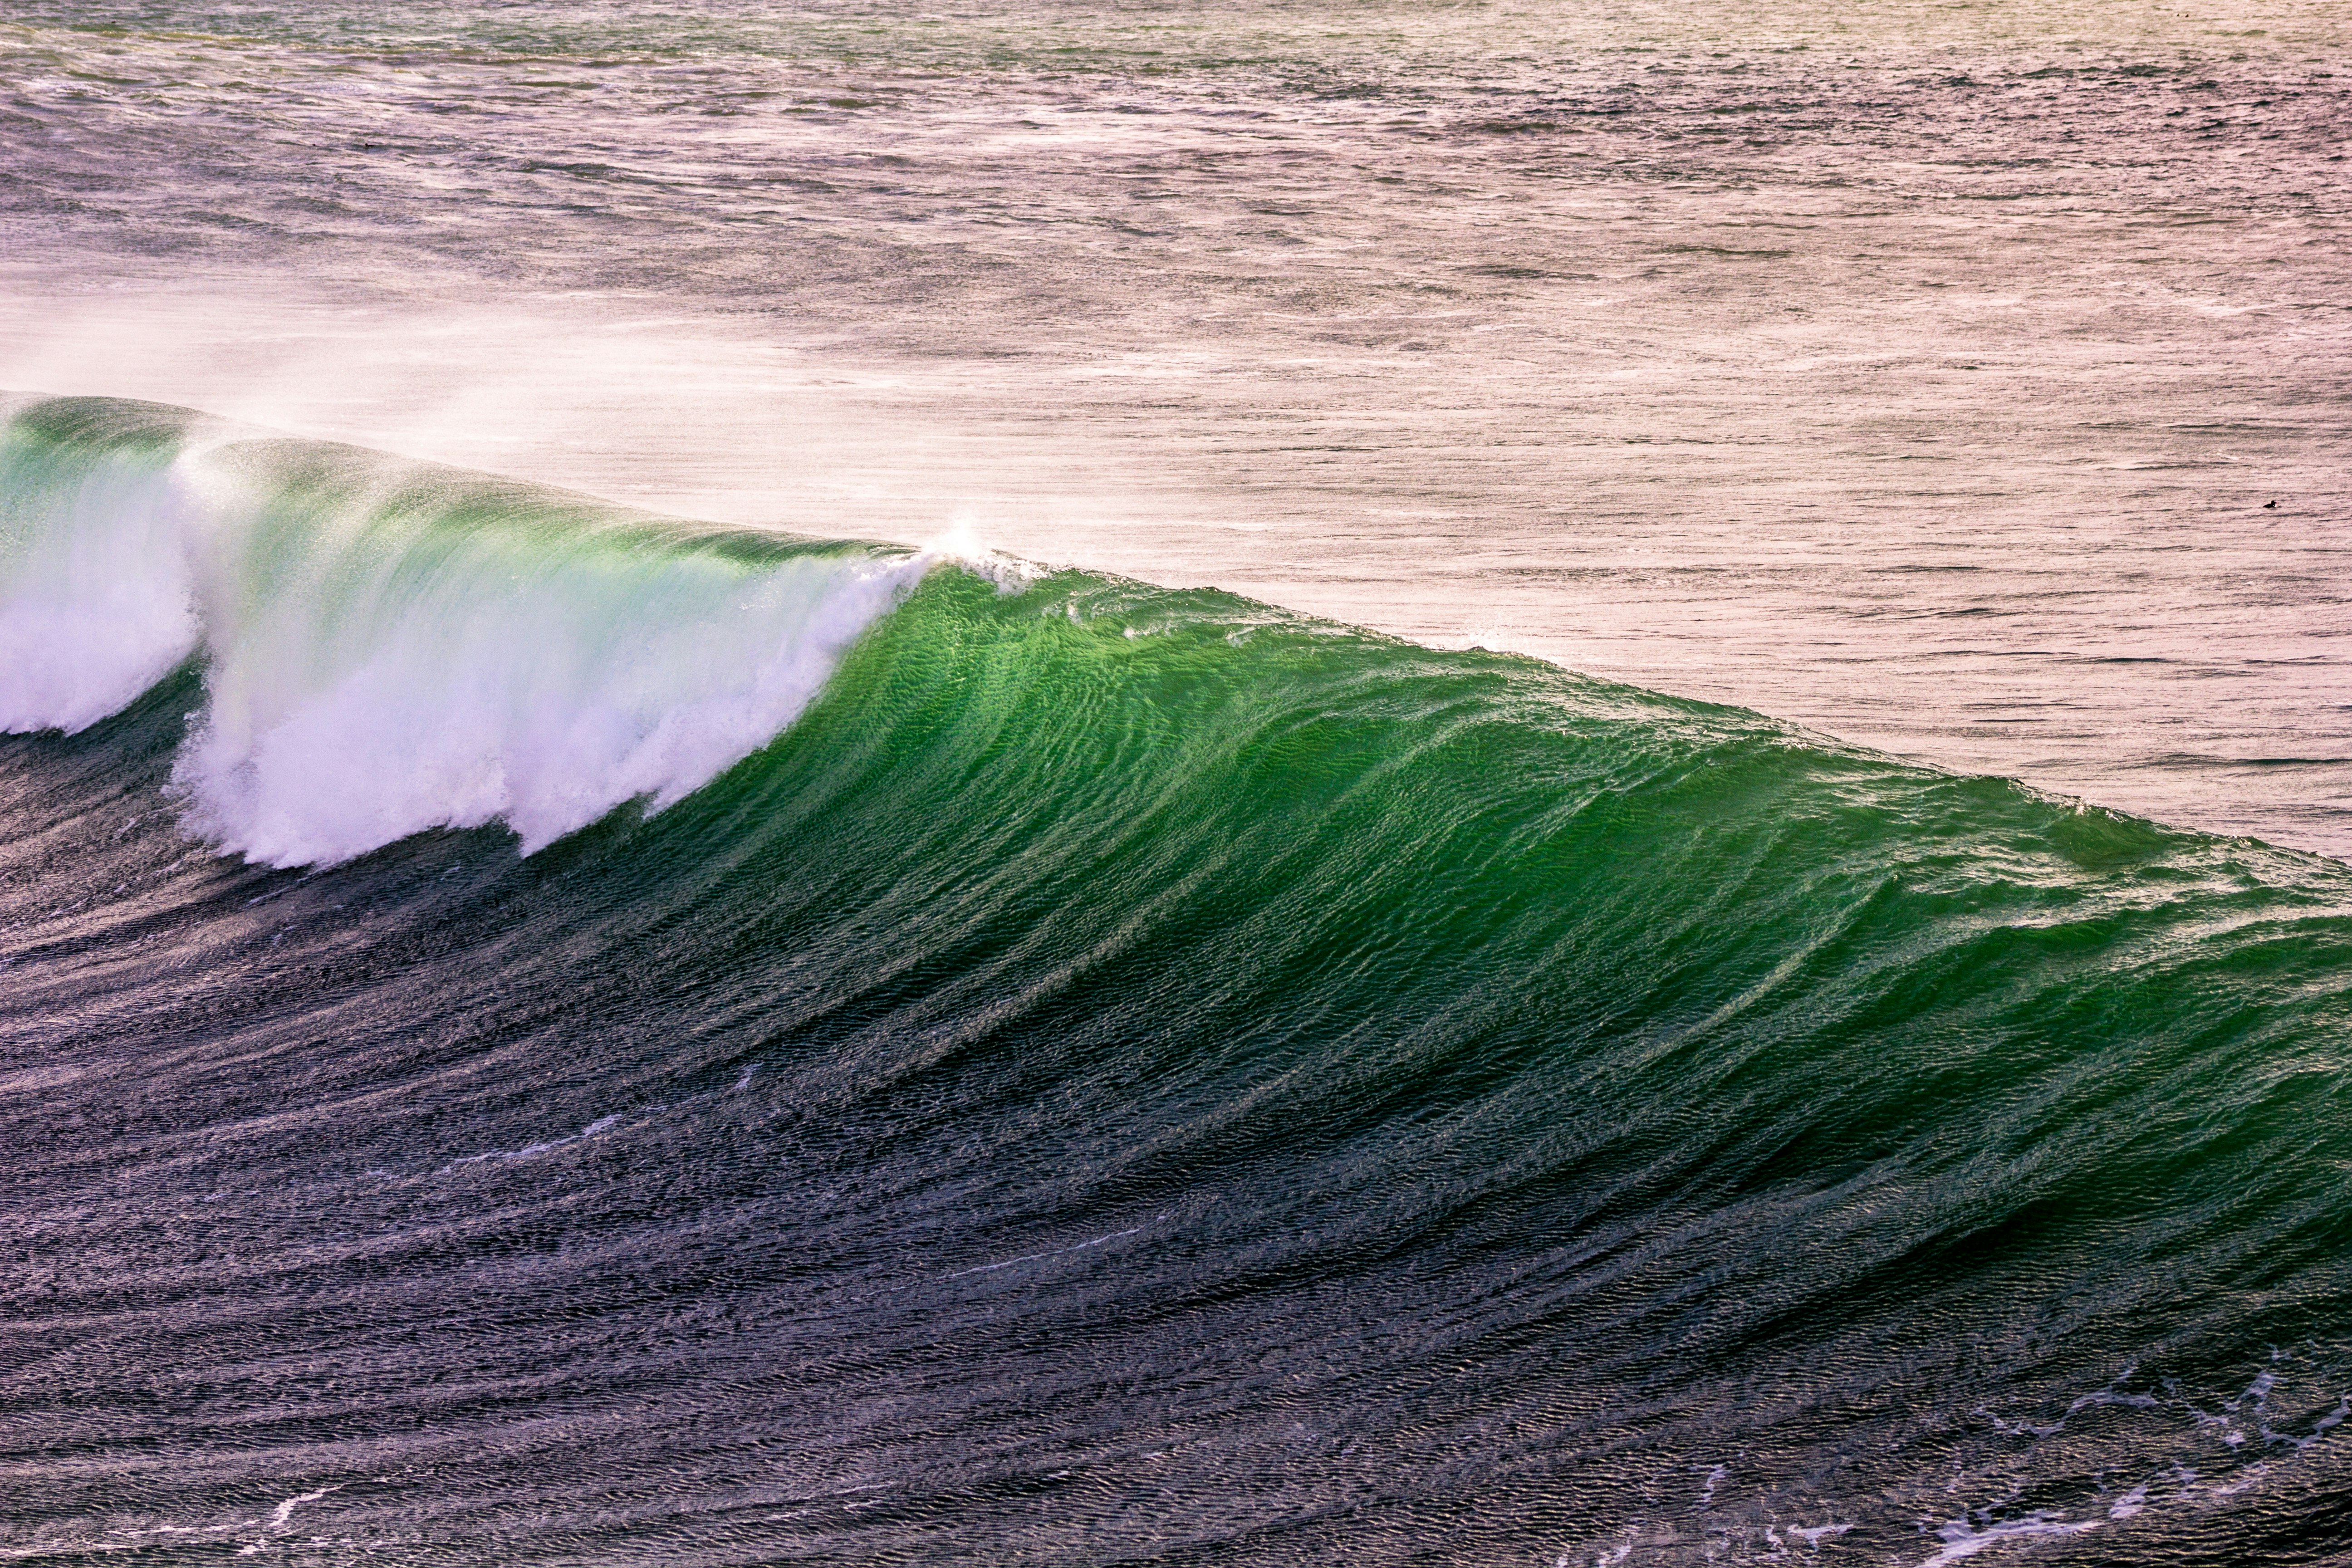 photo of barrel waves